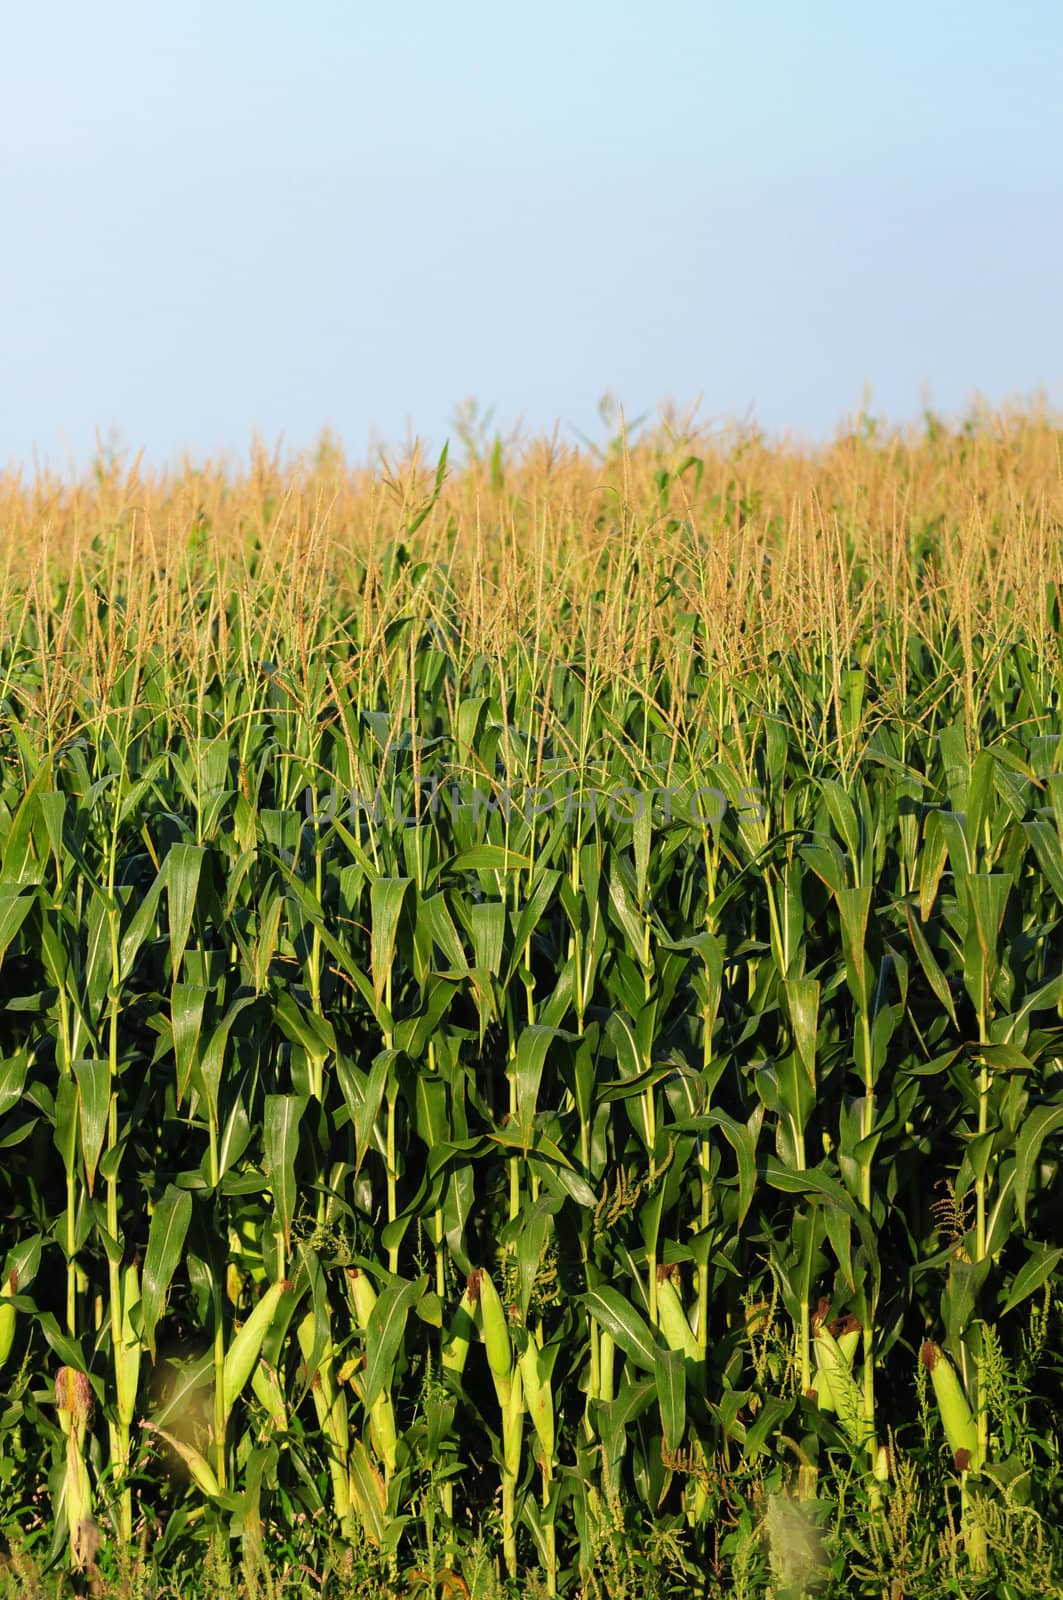 Cornfield with mature cornstalks against a blue sky